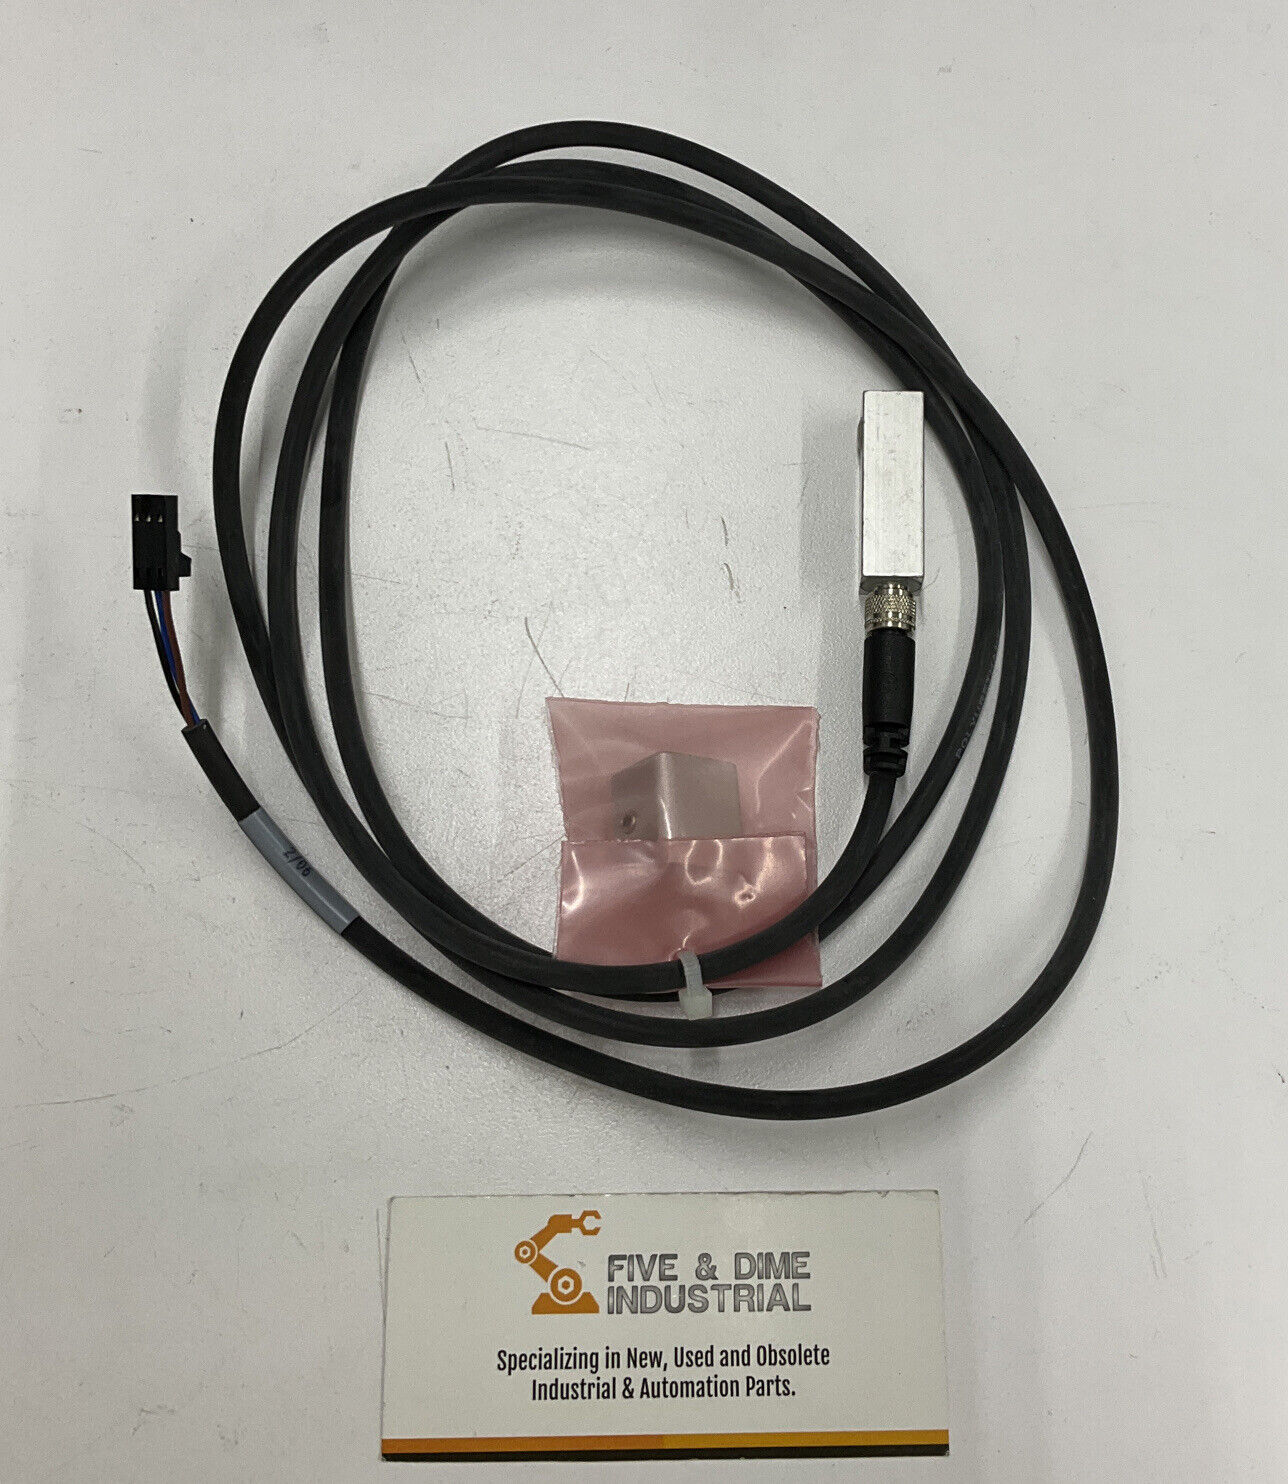 Origa 47081701 Type IS Proximity Sensor 10-30VDC w/ Bracket & Cable (BL190)